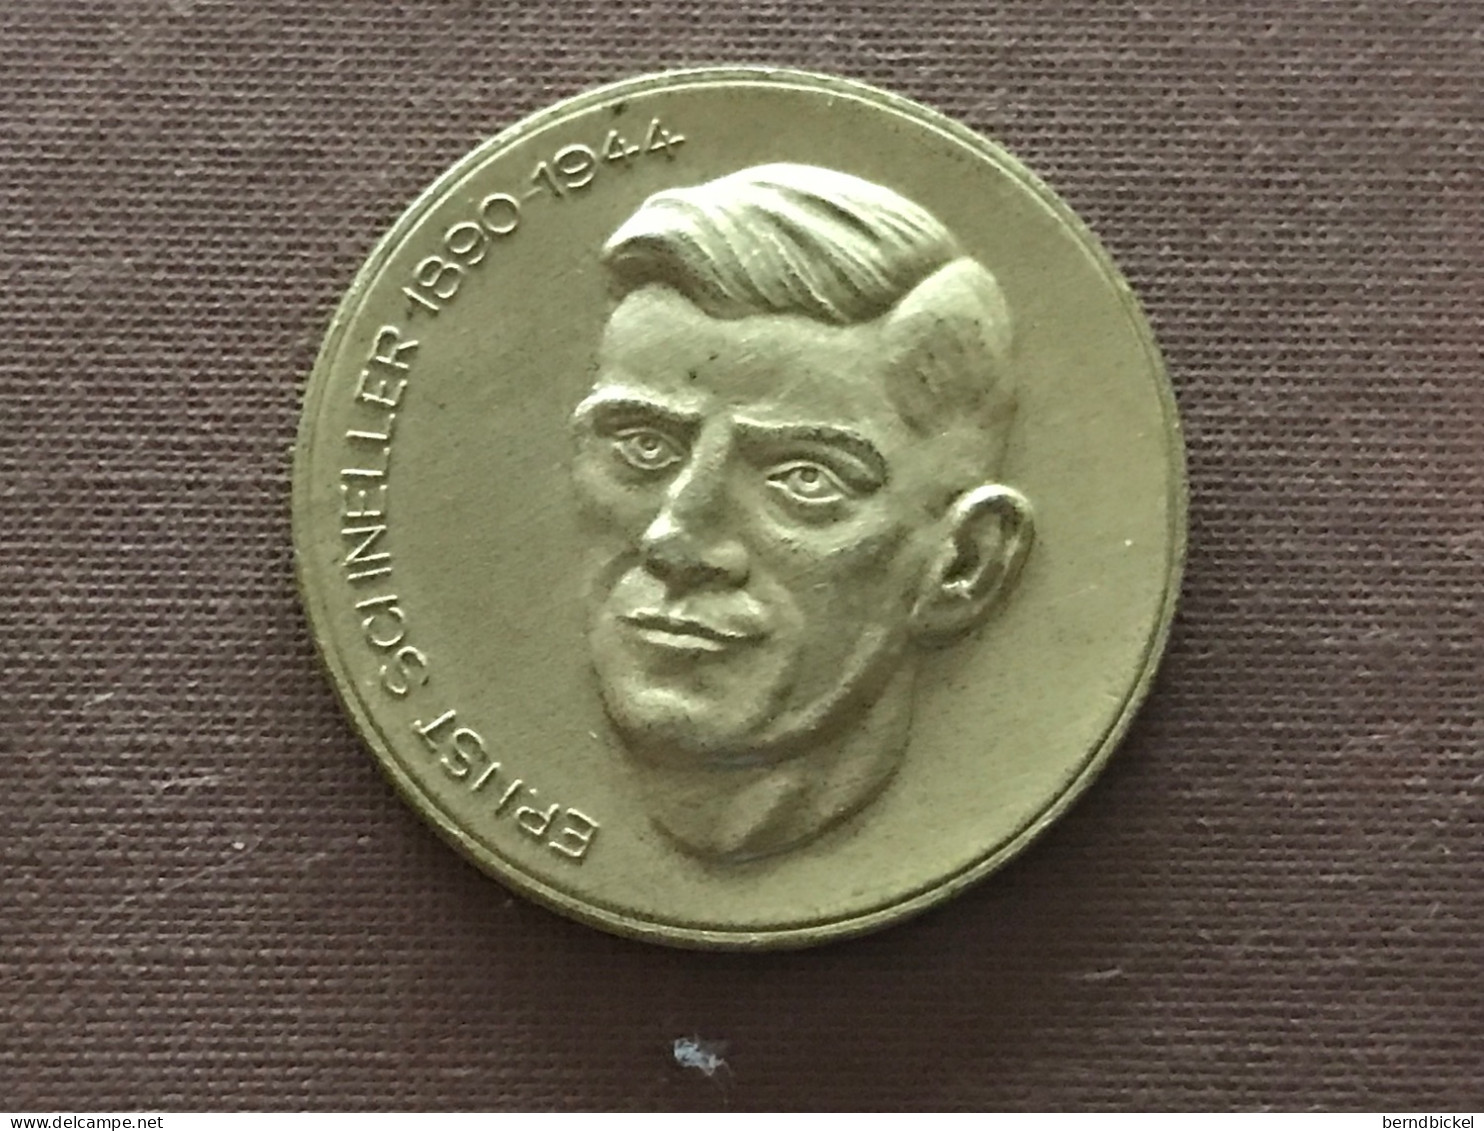 Münze Münzen Medaille DDR Bernd Schneller Revolutionärer Führer - Monarchia/ Nobiltà